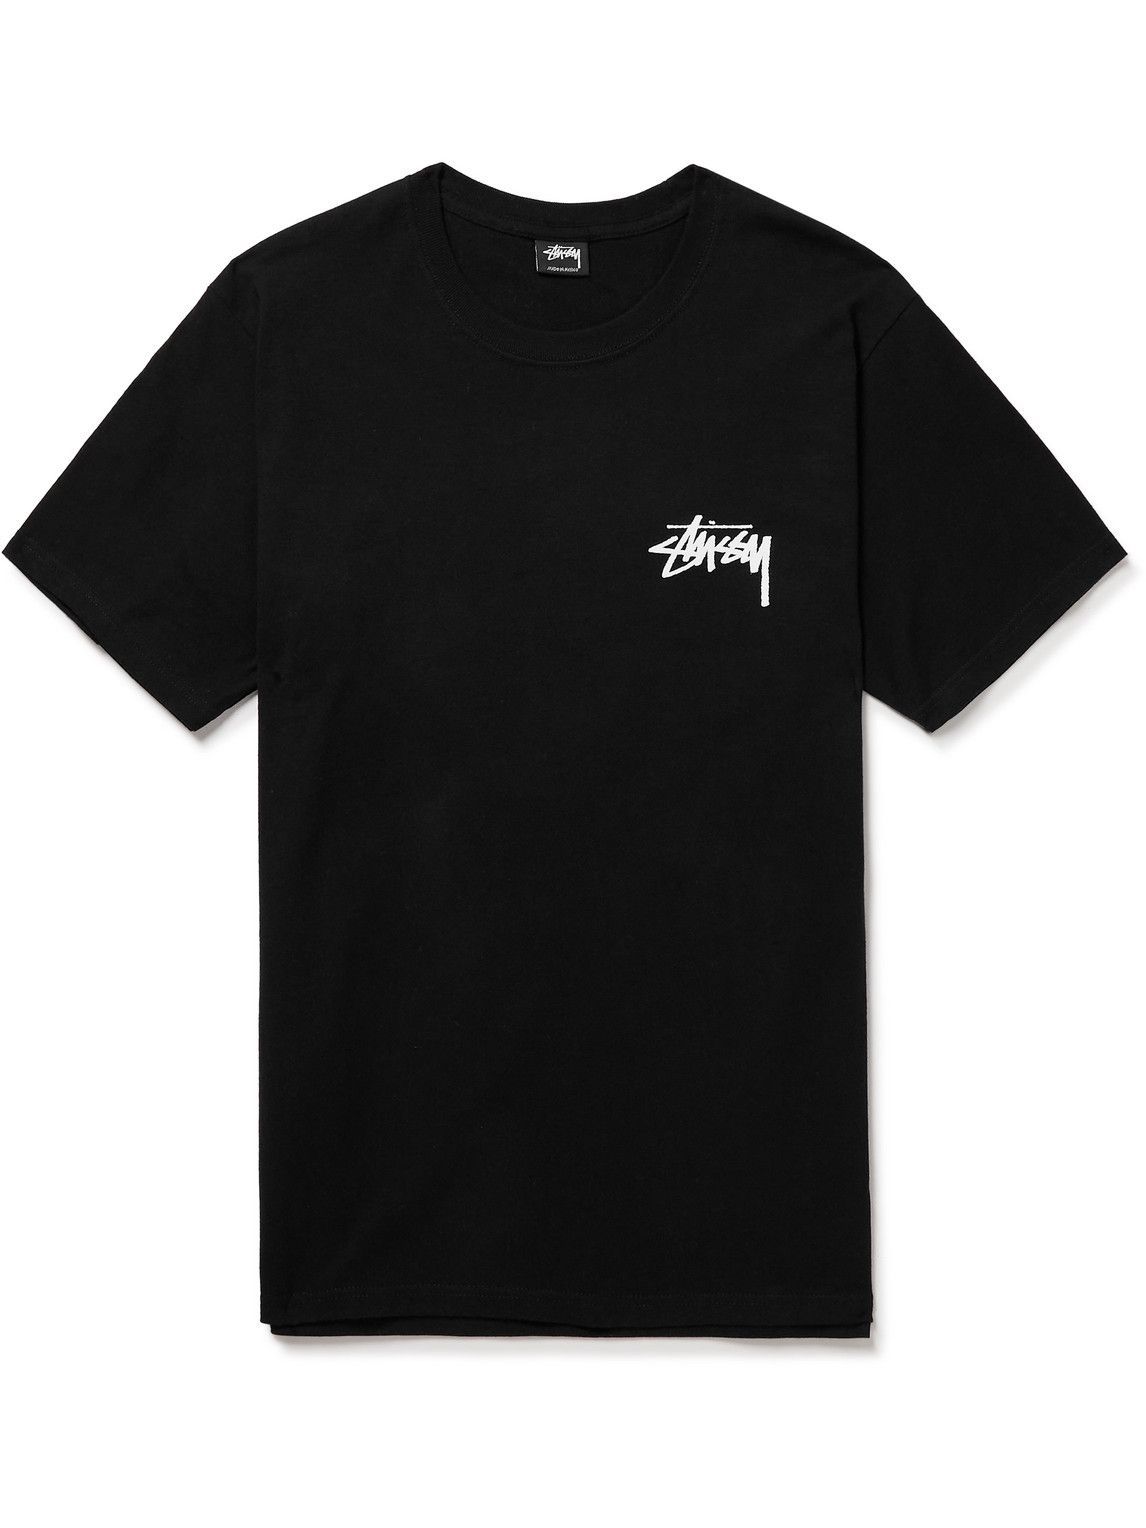 Stussy - Energy Printed Cotton-Jersey T-Shirt - Black Stussy